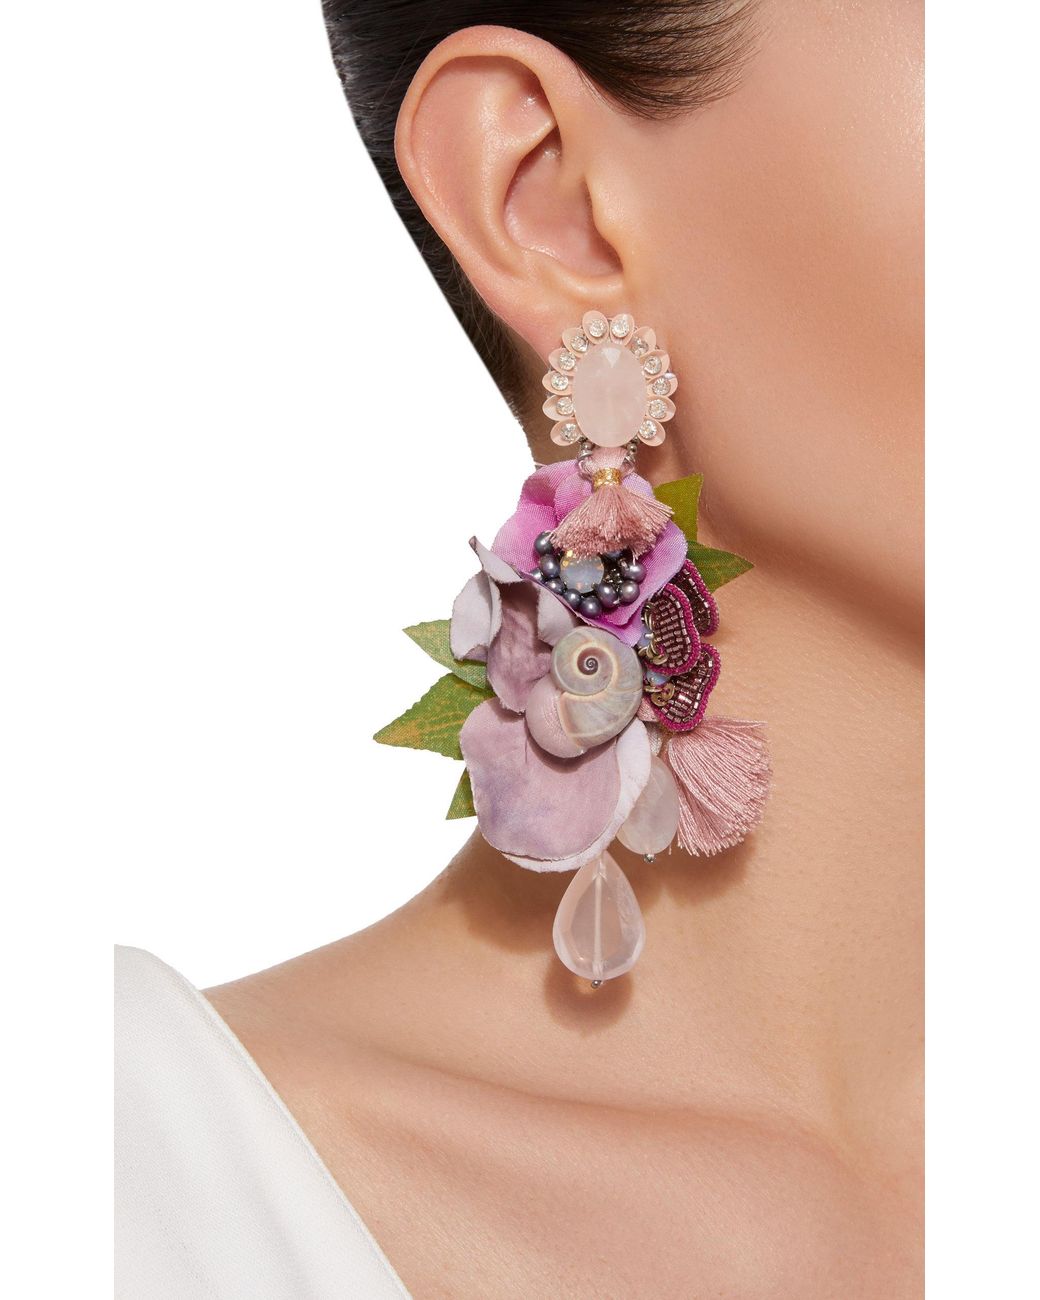 Ranjana Khan Earrings : Buy Ranjana Khan Floral Drop Earrings Online